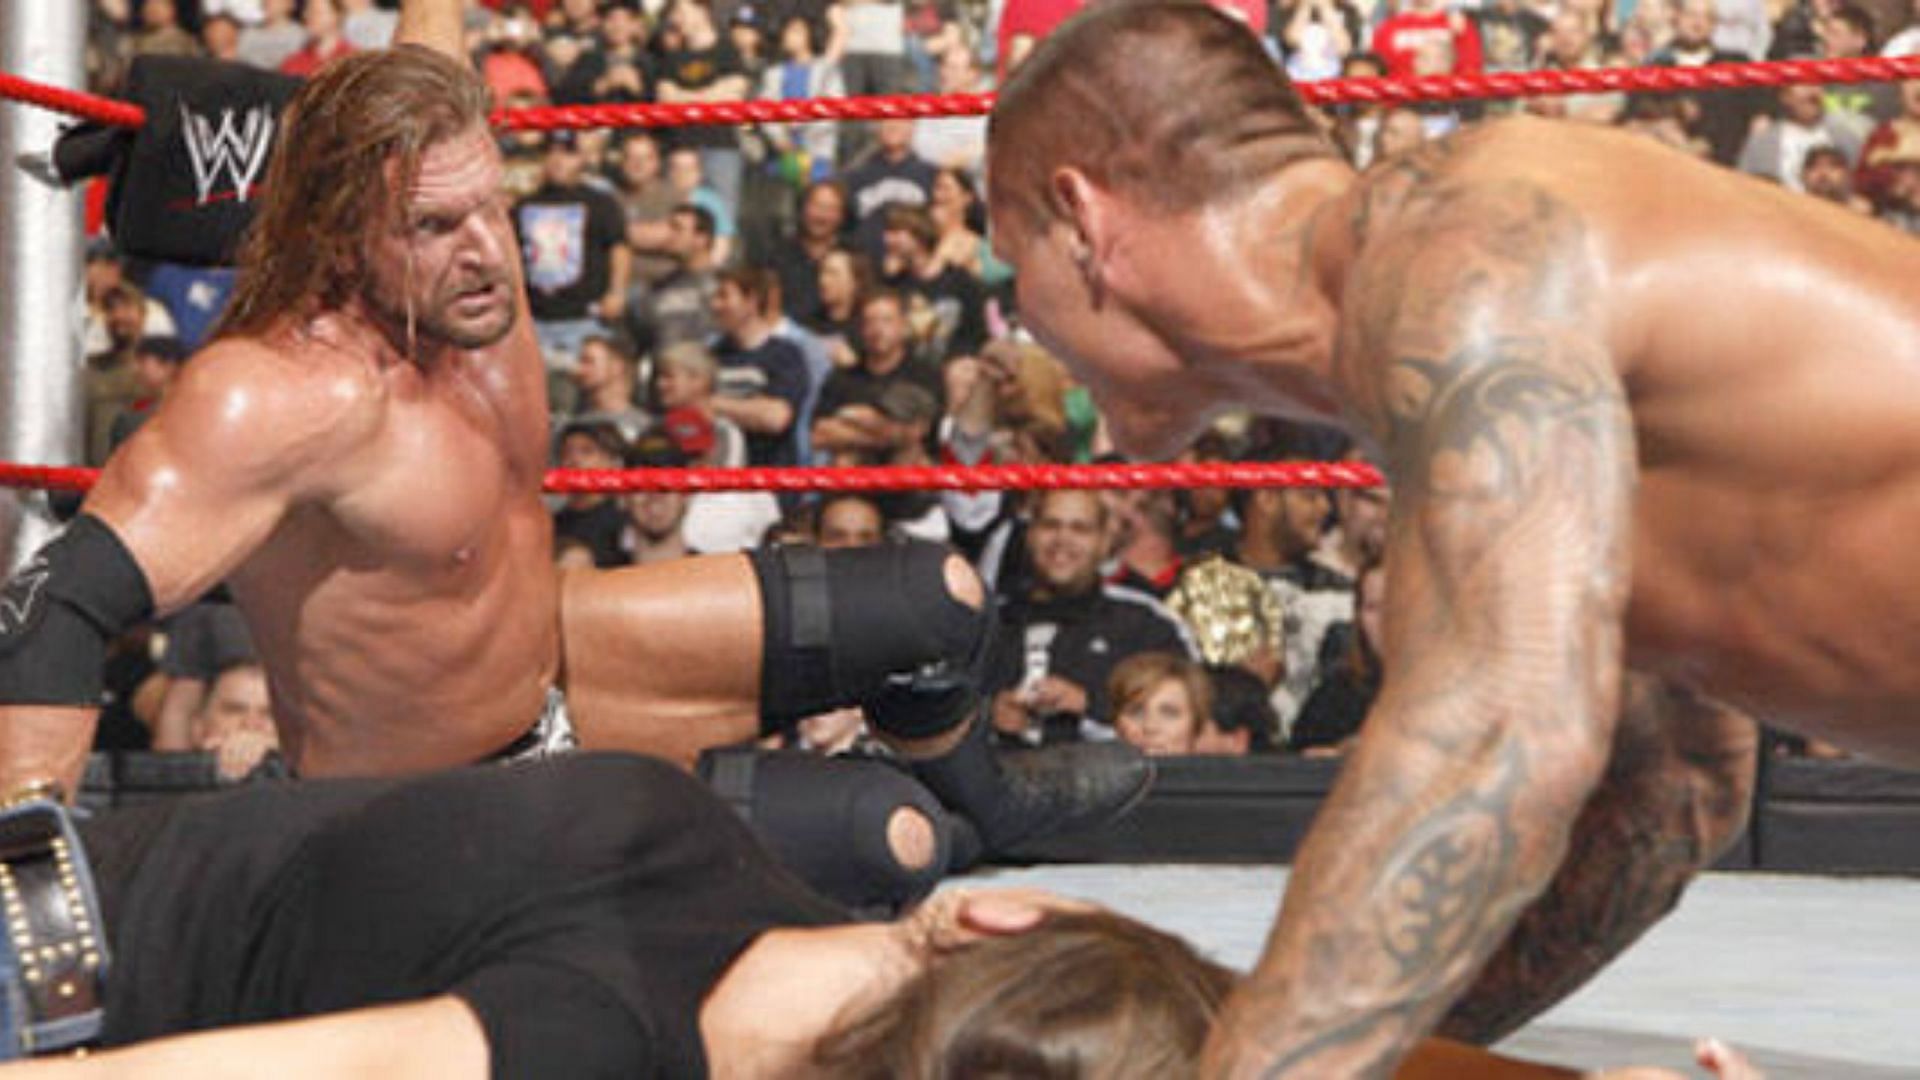 Randy Orton took extreme steps against Triple H.